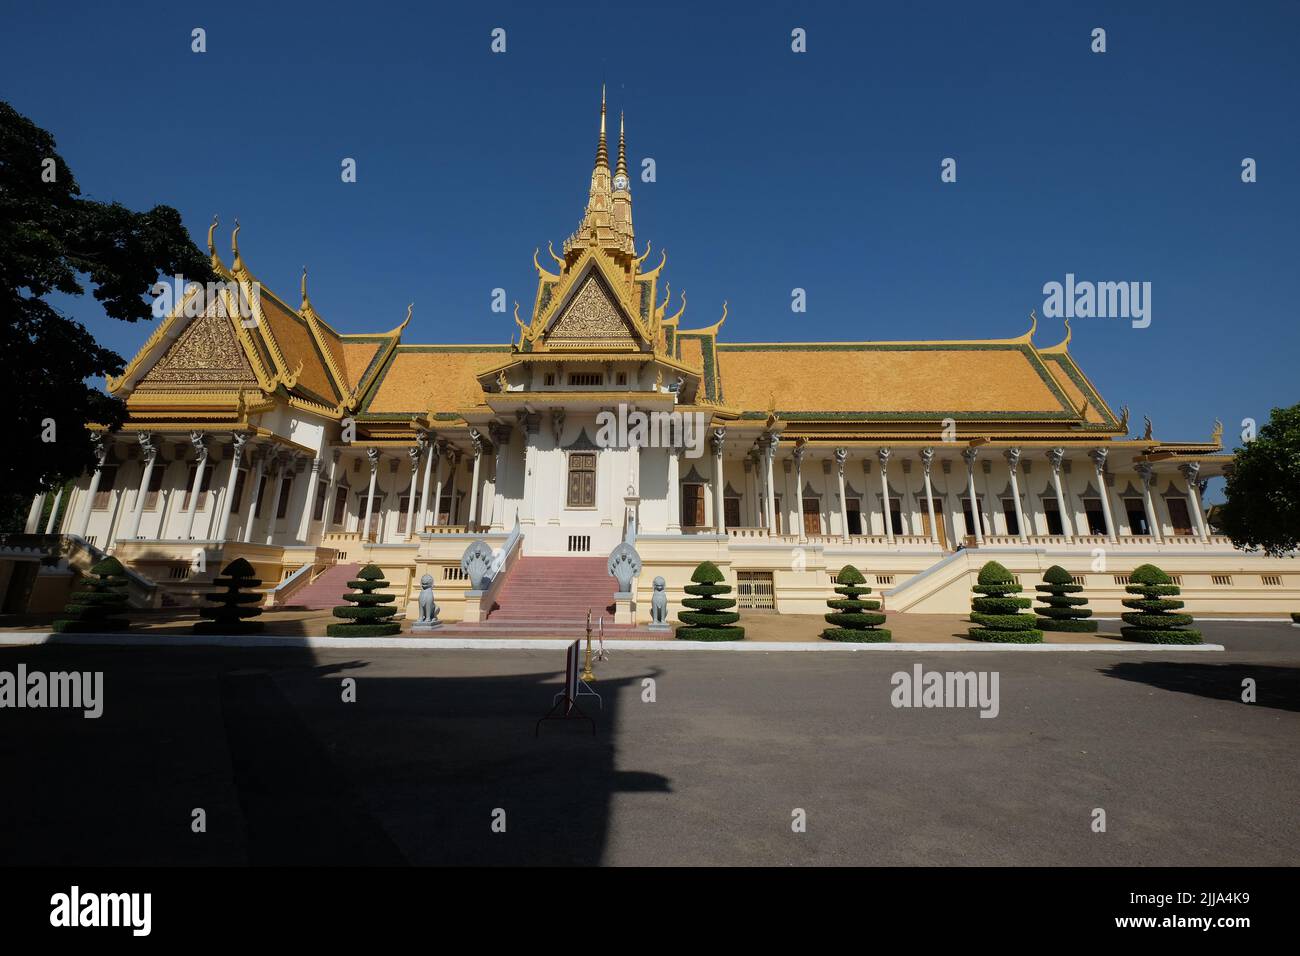 Facade of the Royal Palace in the capital city of Phnom Penh, Cambodia. Stock Photo